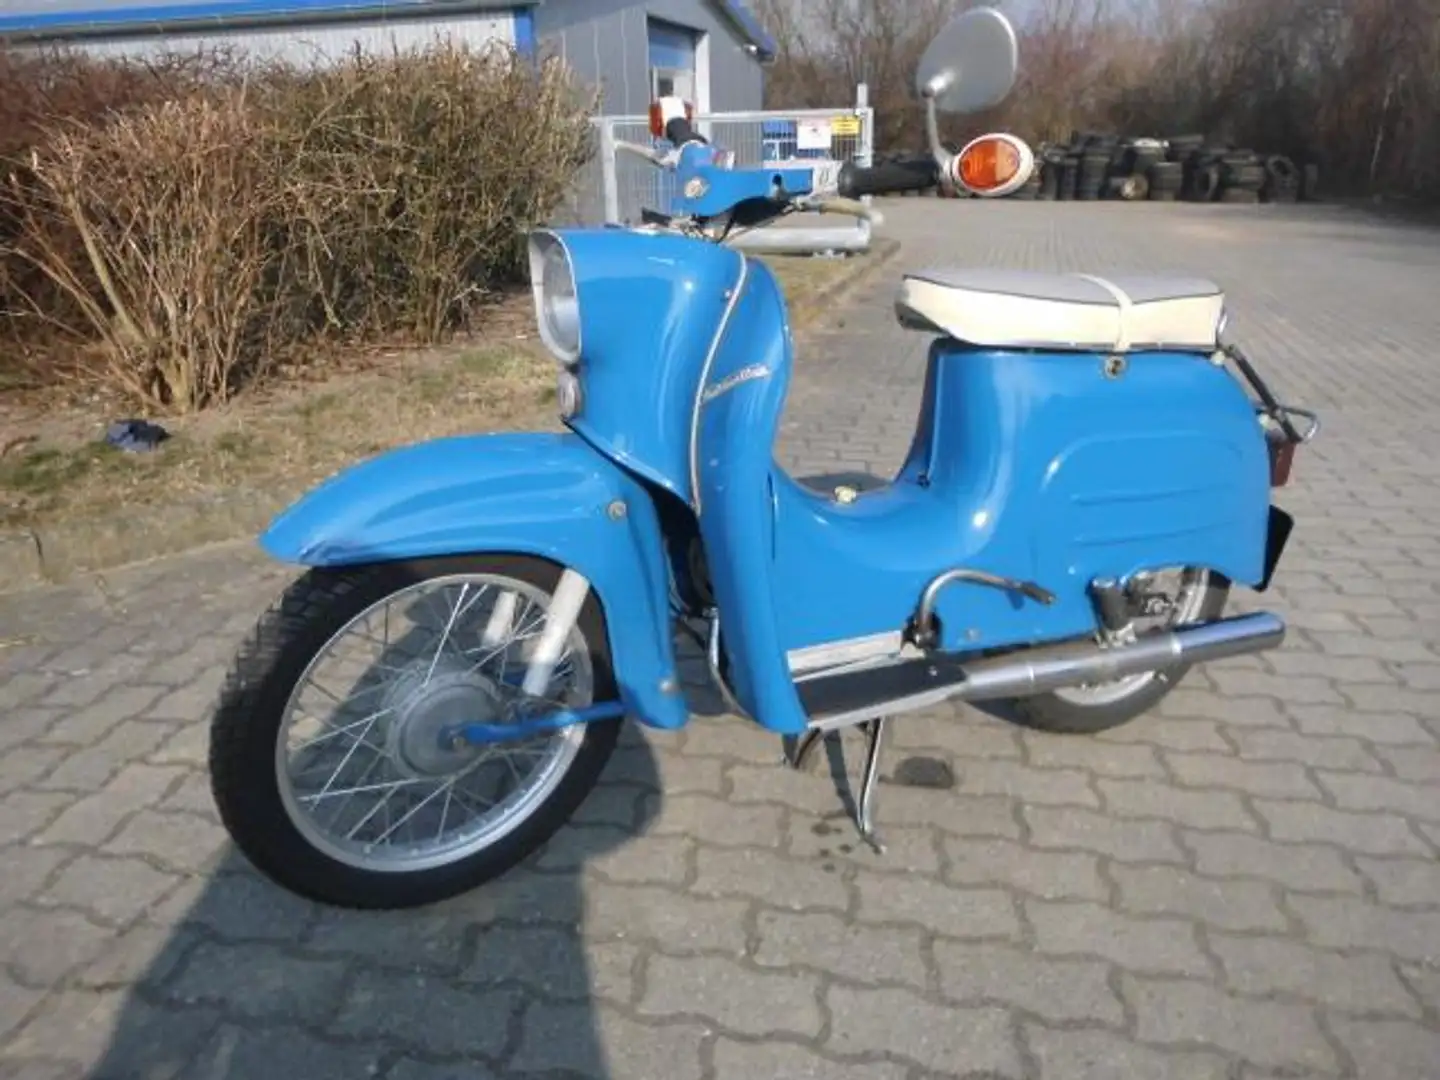 Simson KR 51 Mofa/Moped/Mokick in Blau gebraucht in Calau für € 3.200,-